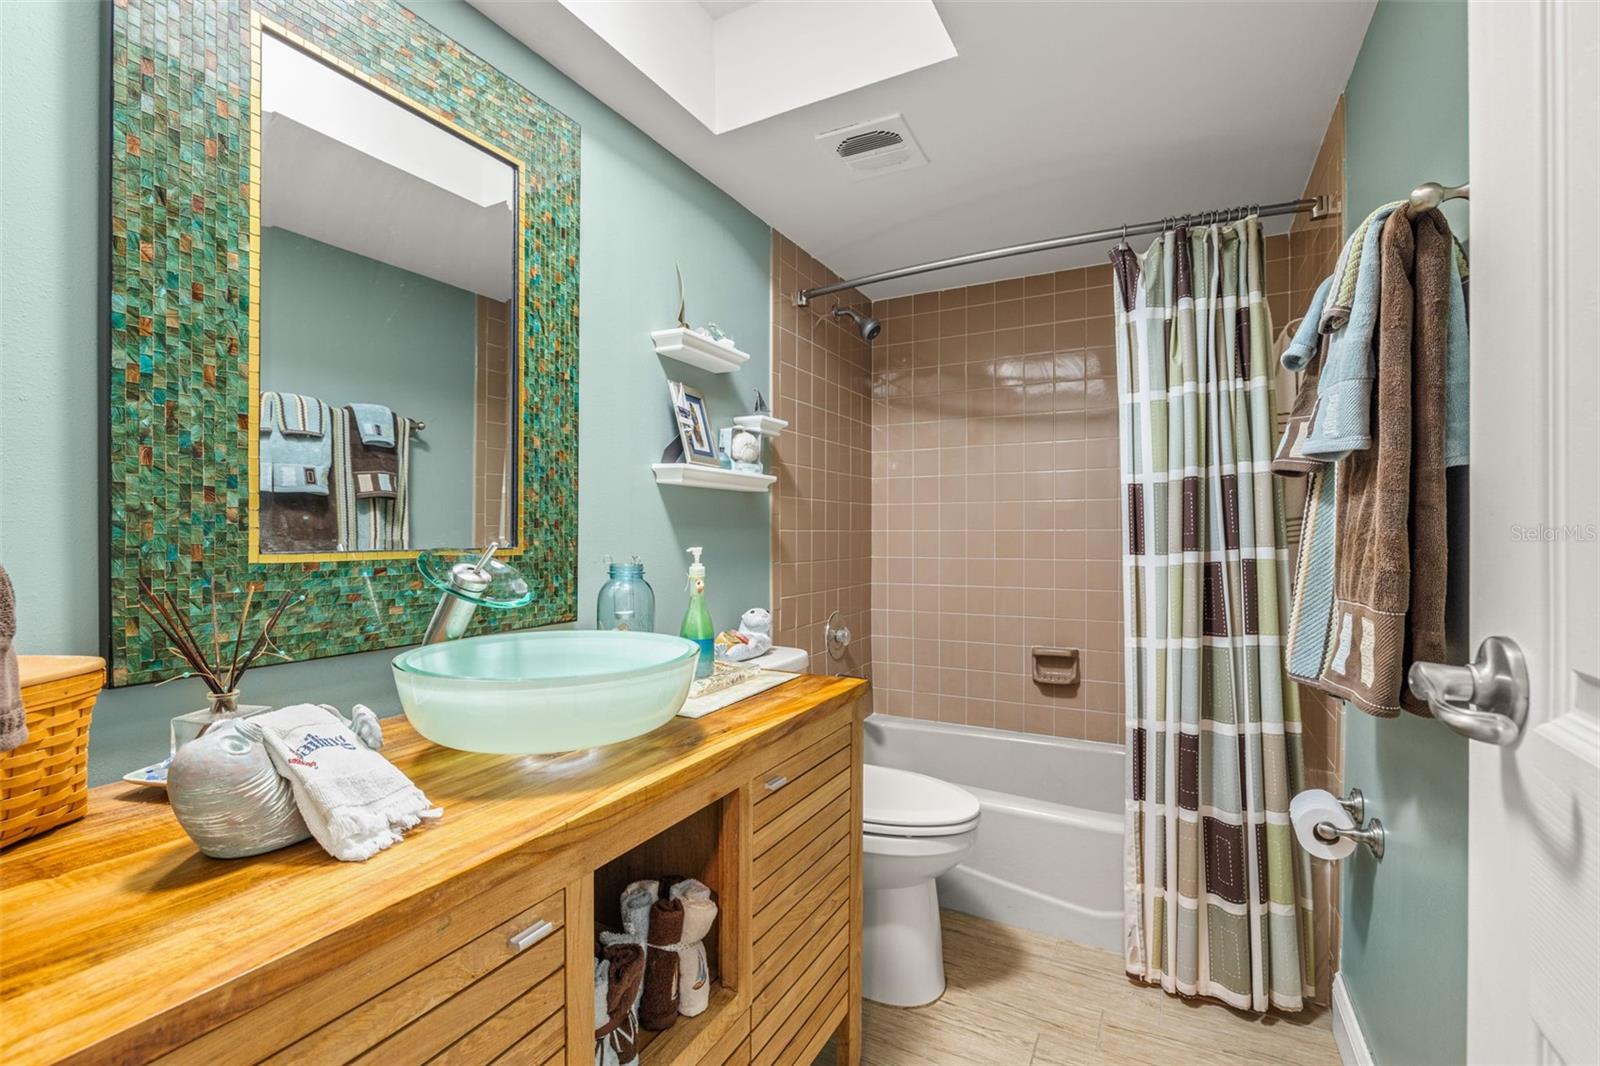 Updated secondary bathroom includes a fabulous teak vanity with waterfall sink basin, updated lighting, vanity mirror and flooring.